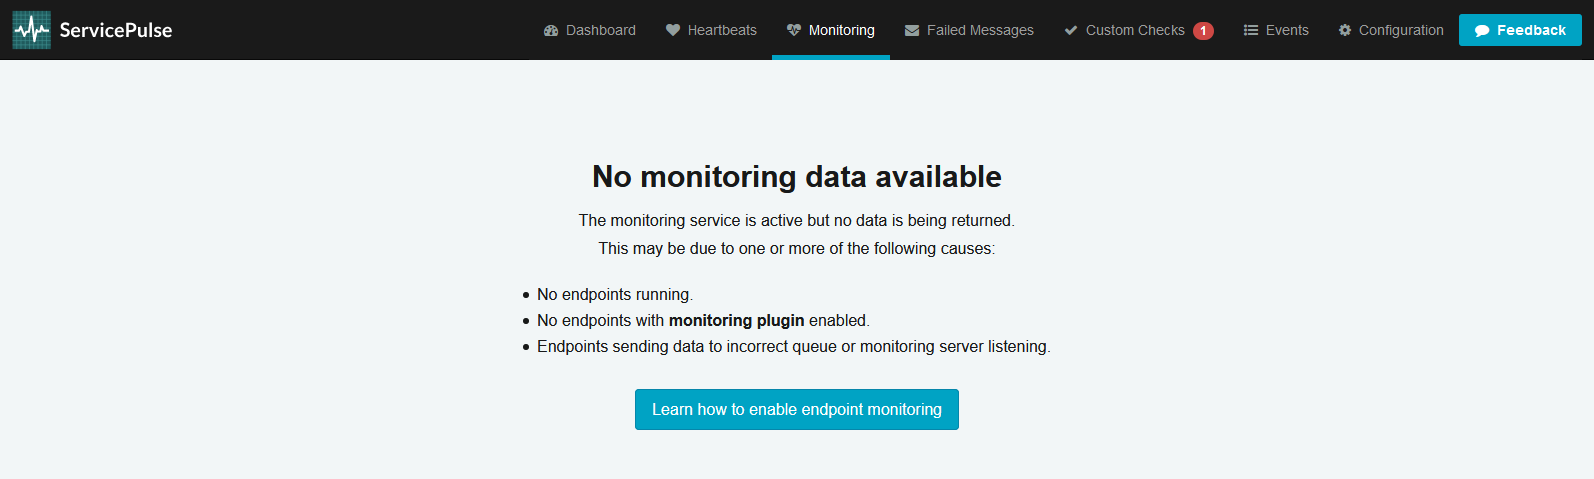 ServicePulse - Monitoring Tab - Empty